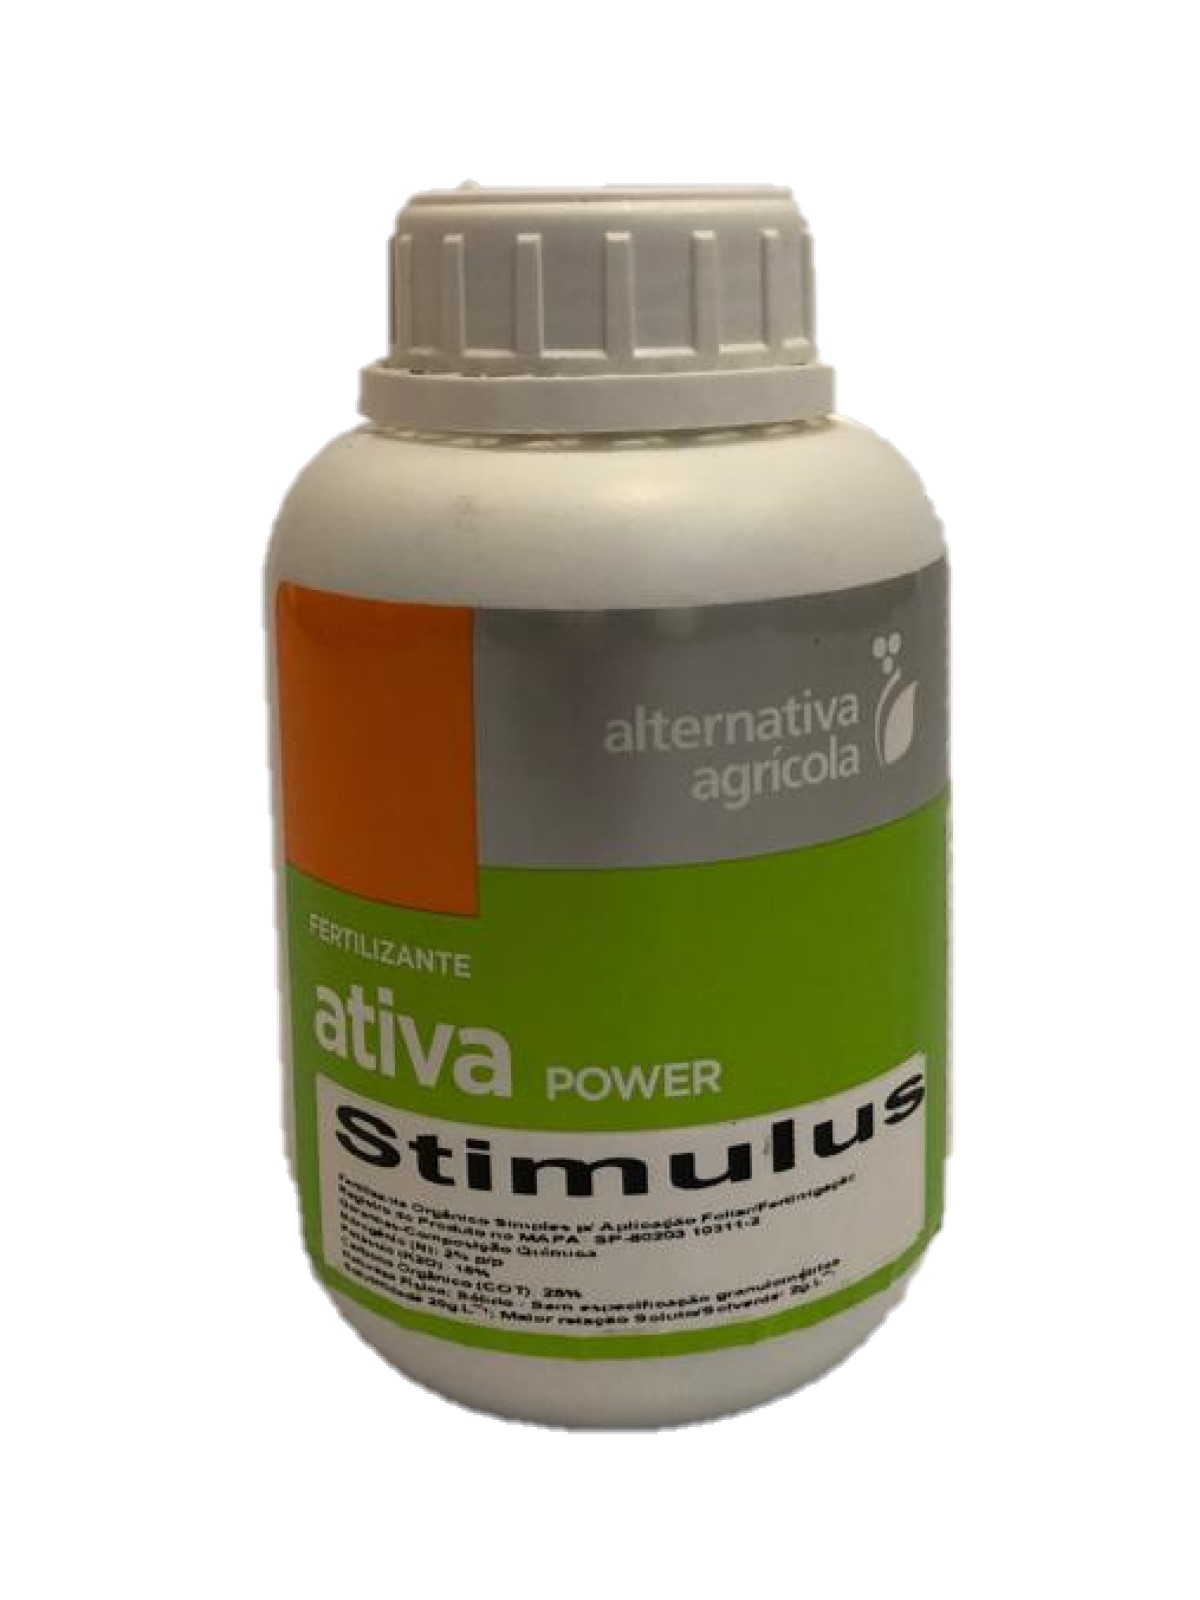 Ativa Power Stimulus - Bioestimulante Enraizador - 250g